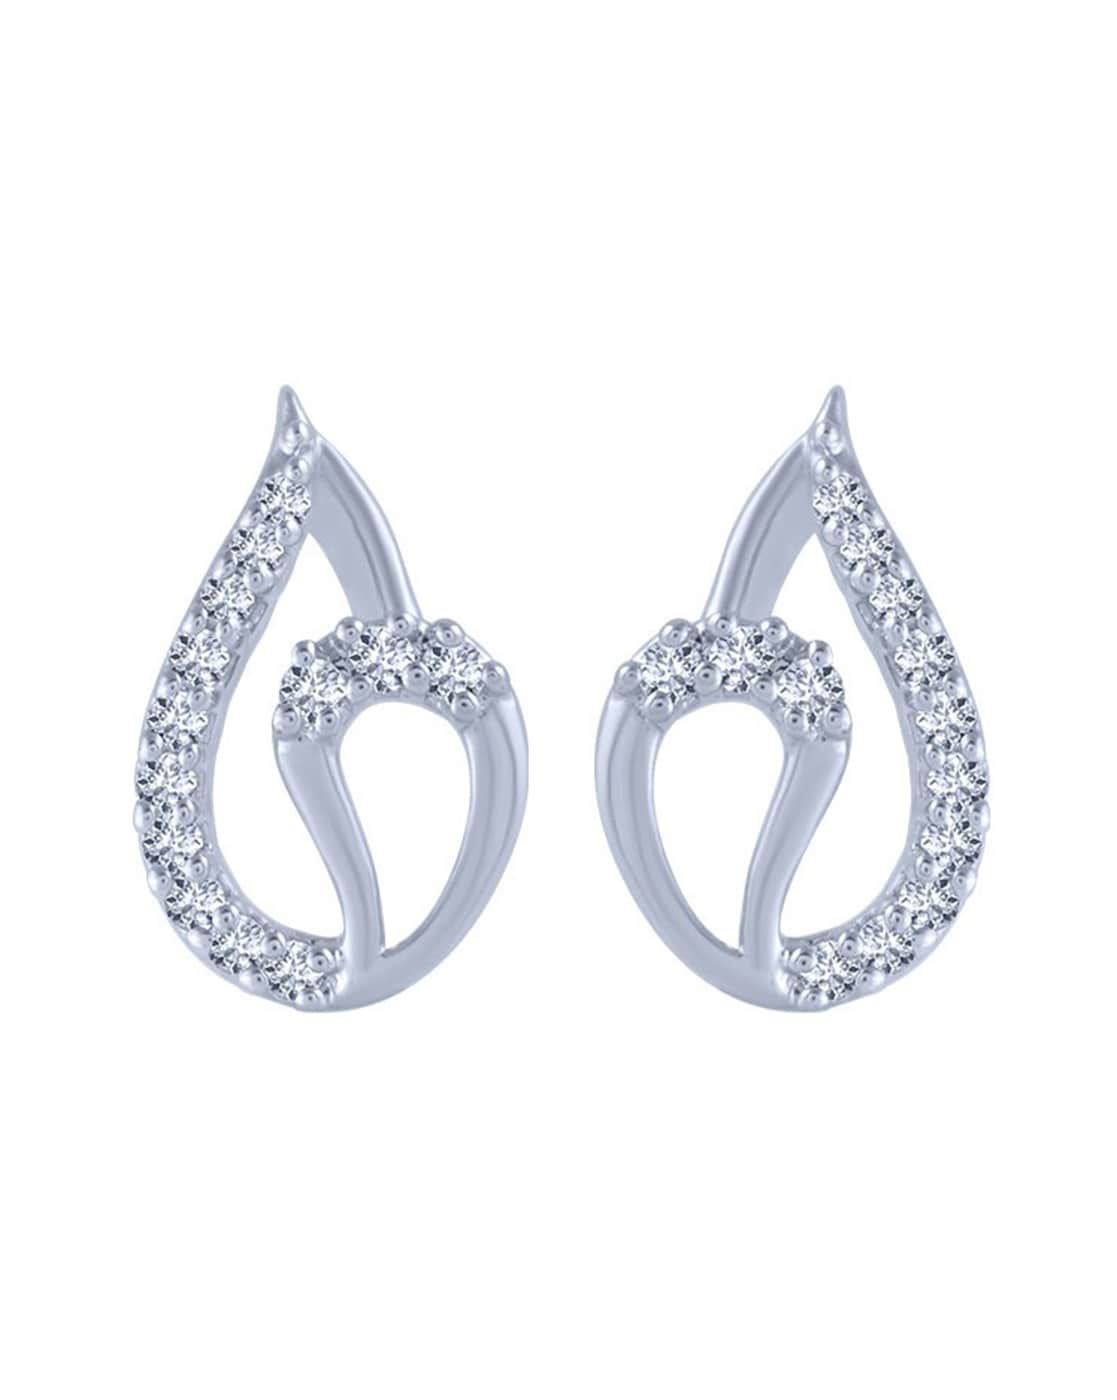 Aksaj Infinity Earrings  Buy Certified Gold  Diamond Earrings Online   KuberBoxcom  KuberBoxcom